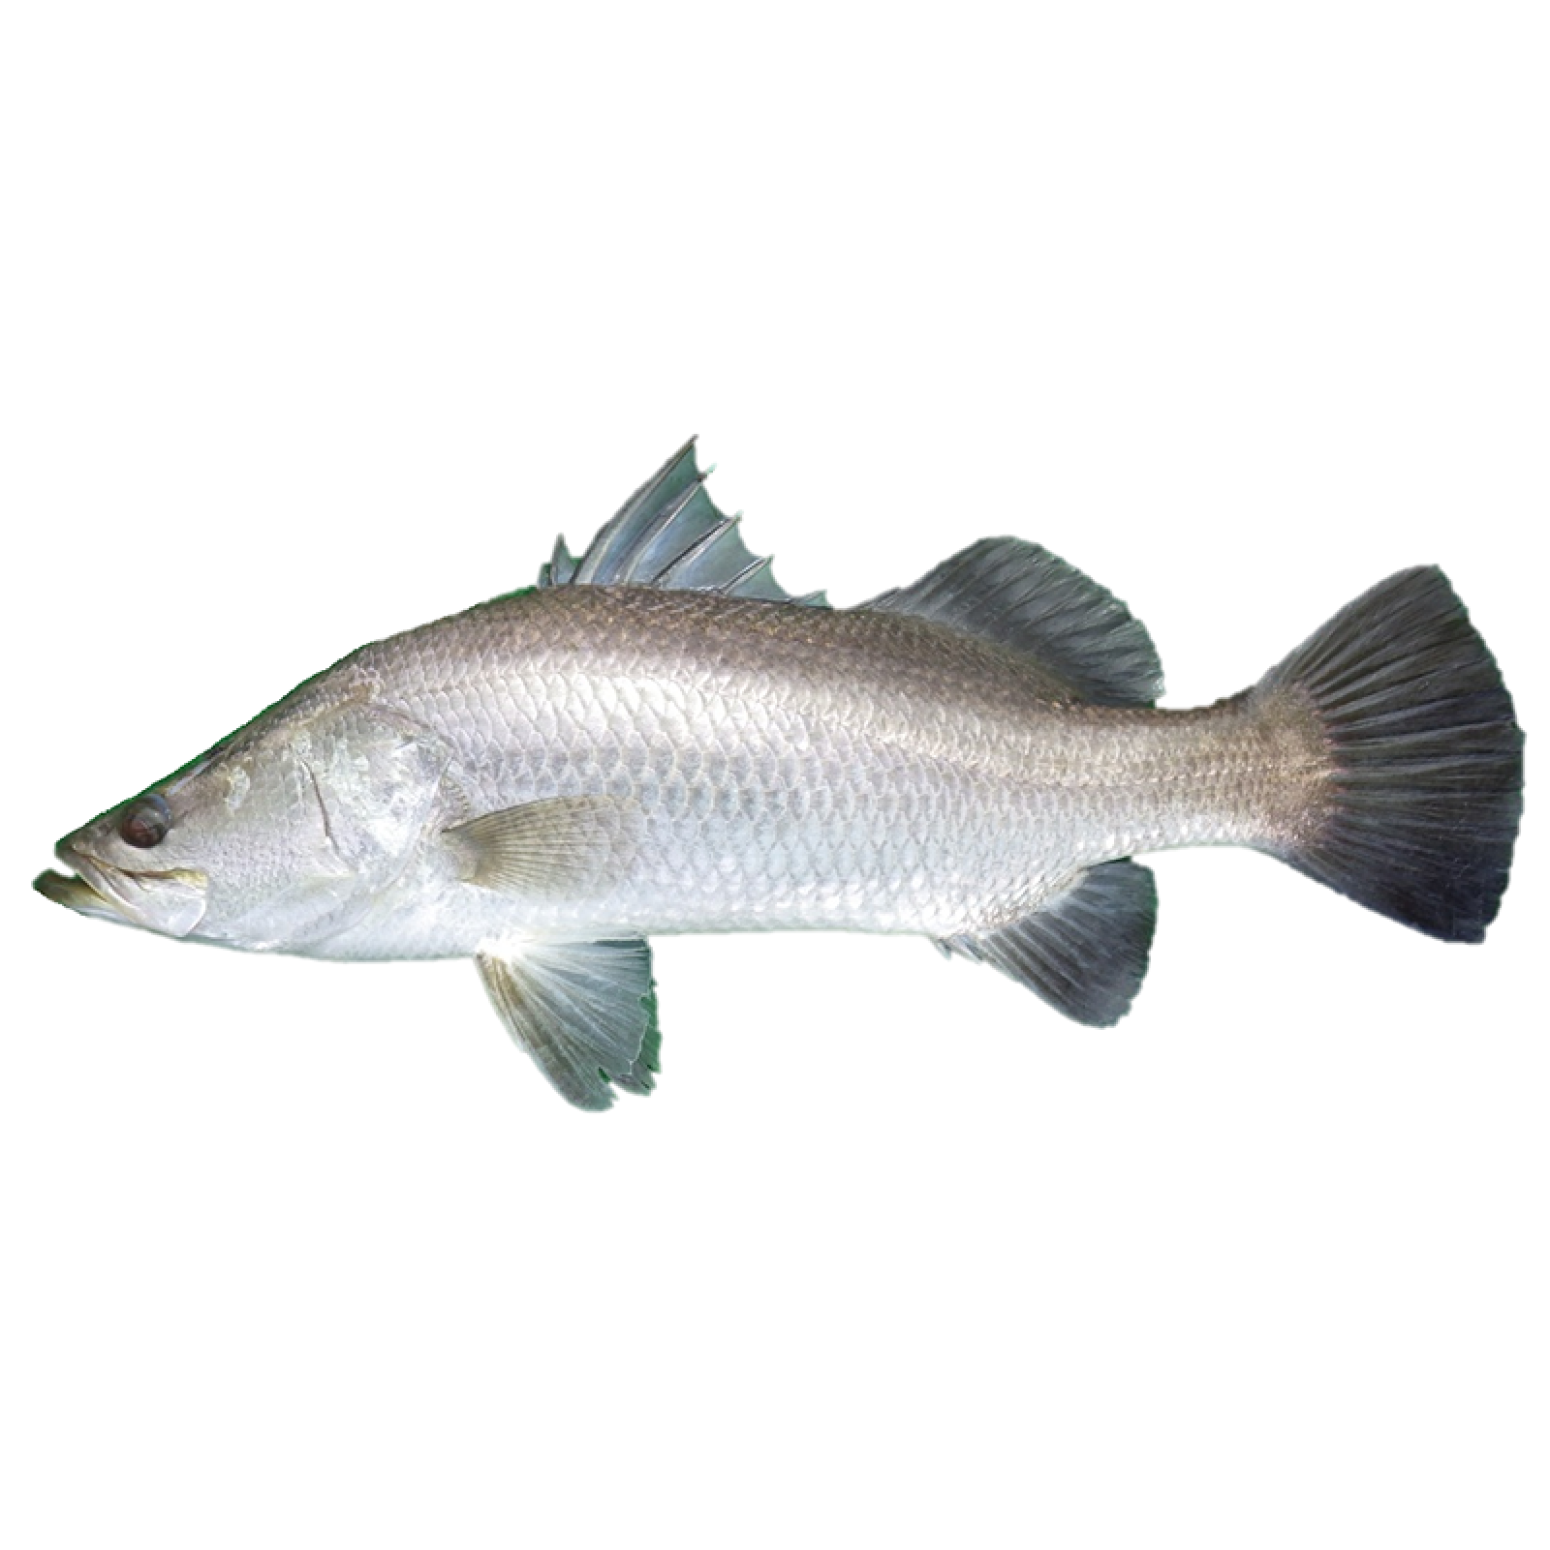 Barramundi fish Thailand